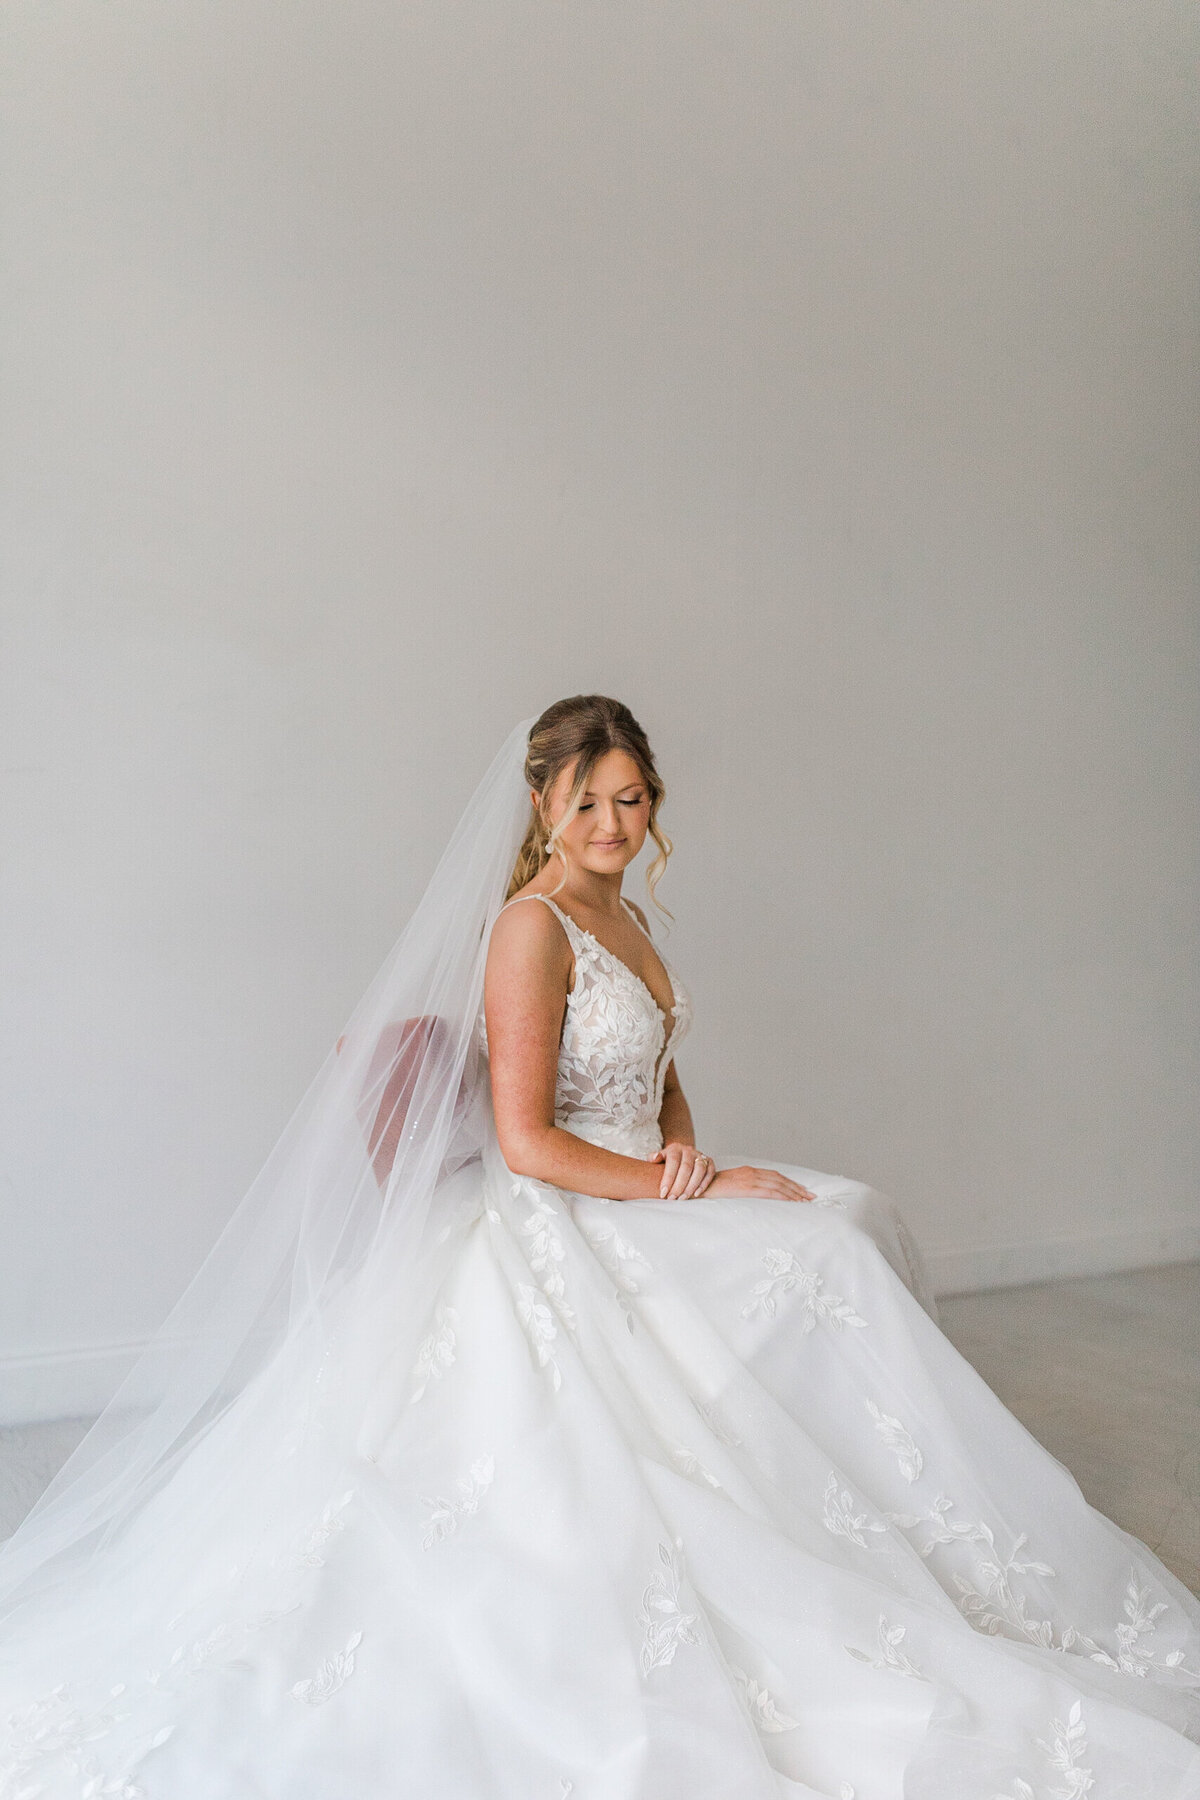 Marissa Reib Photography | Tulsa Wedding Photographer-79-2